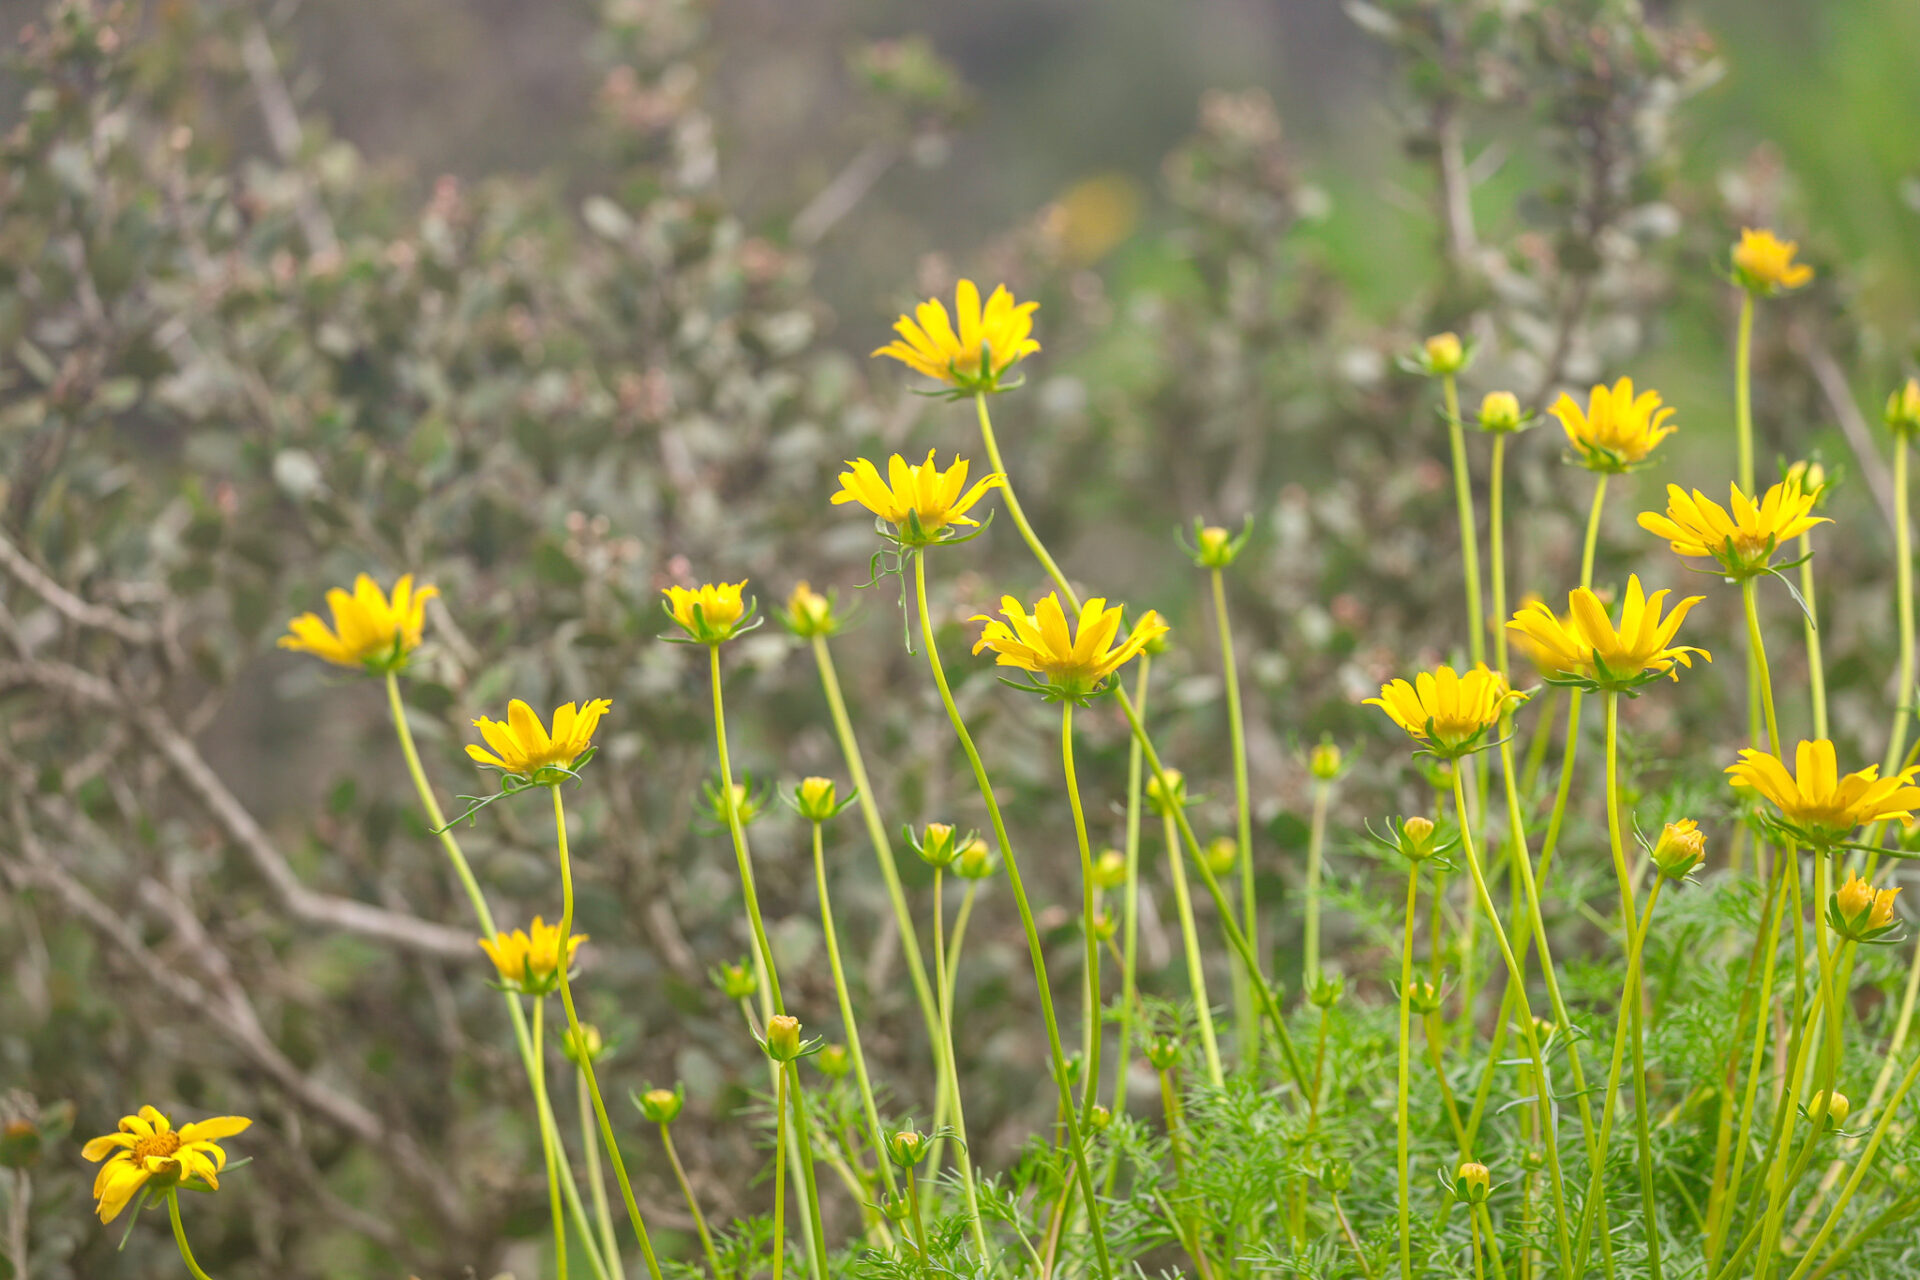 Hillside of sunny yellow daisy-like flowers